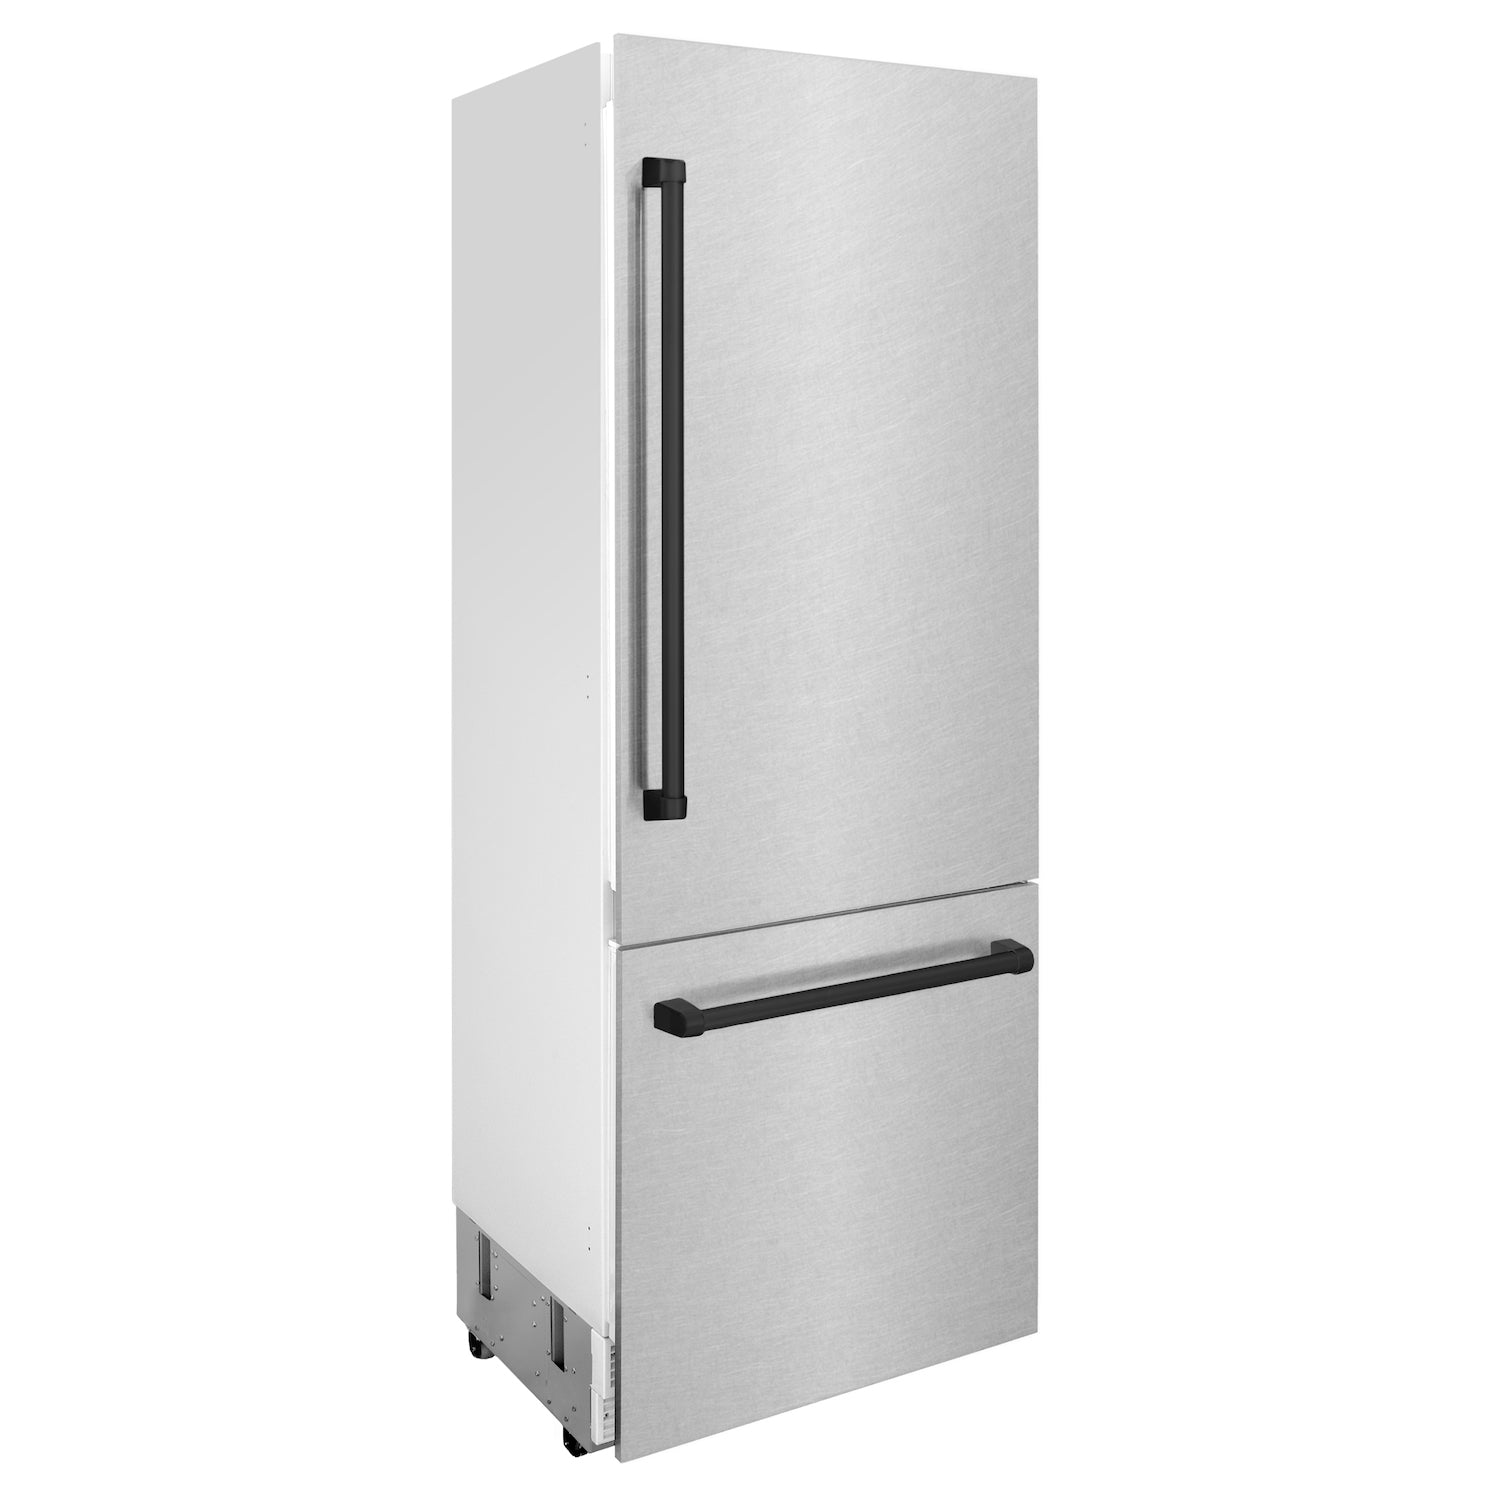 ZLINE 30" Autograph Edition Built-in 2-Door Bottom Freezer Refrigerator - DuraSnow Stainless Steel with Accents, Internal Water and Ice Dispenser